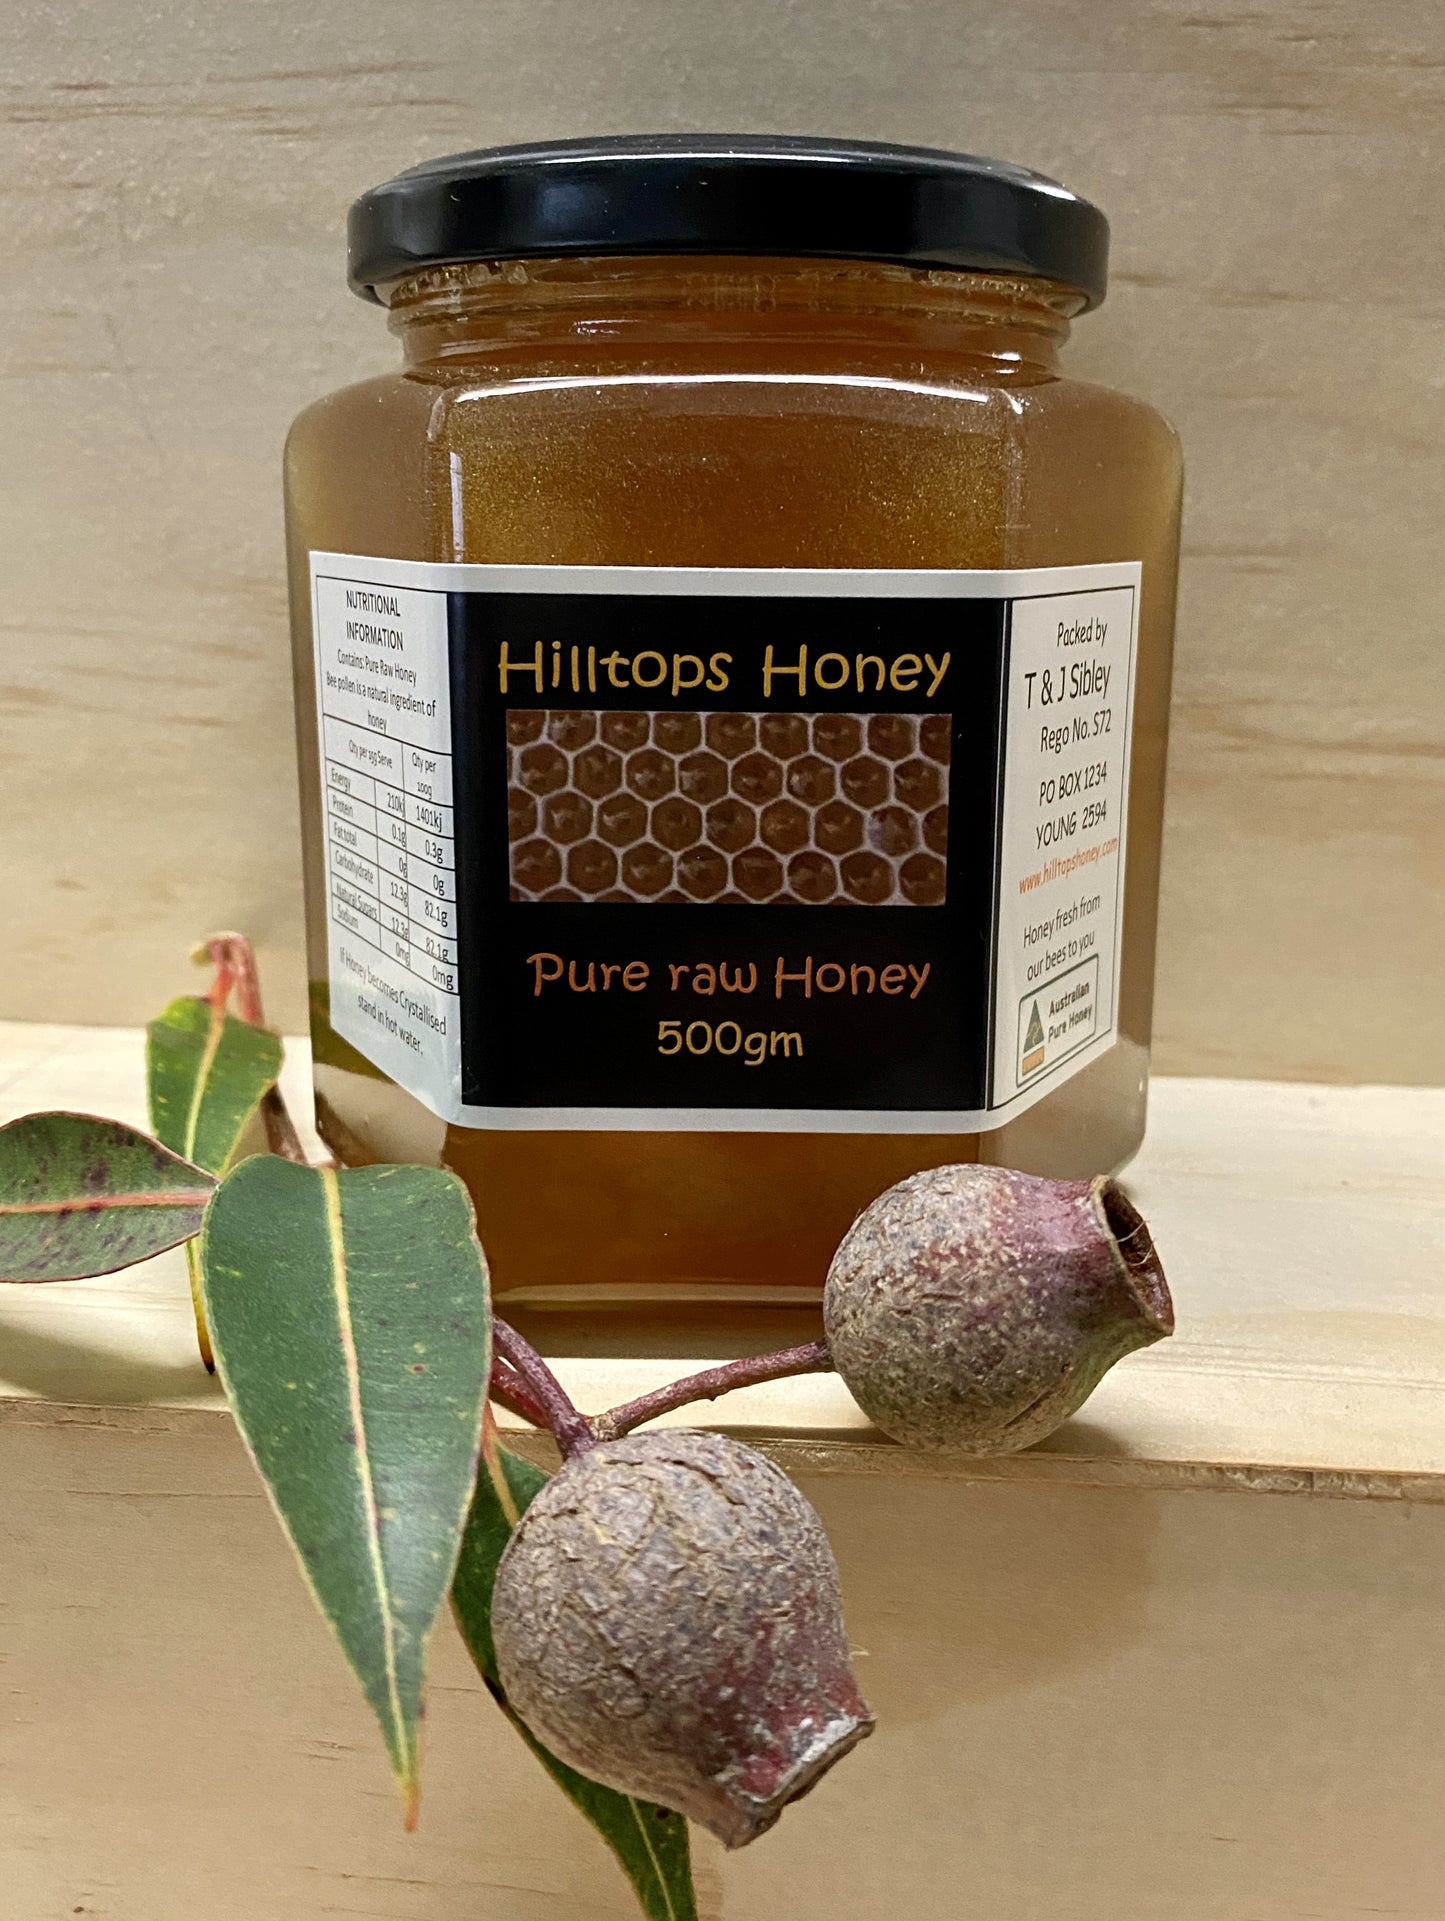 Pure raw honey 500gm glass jar